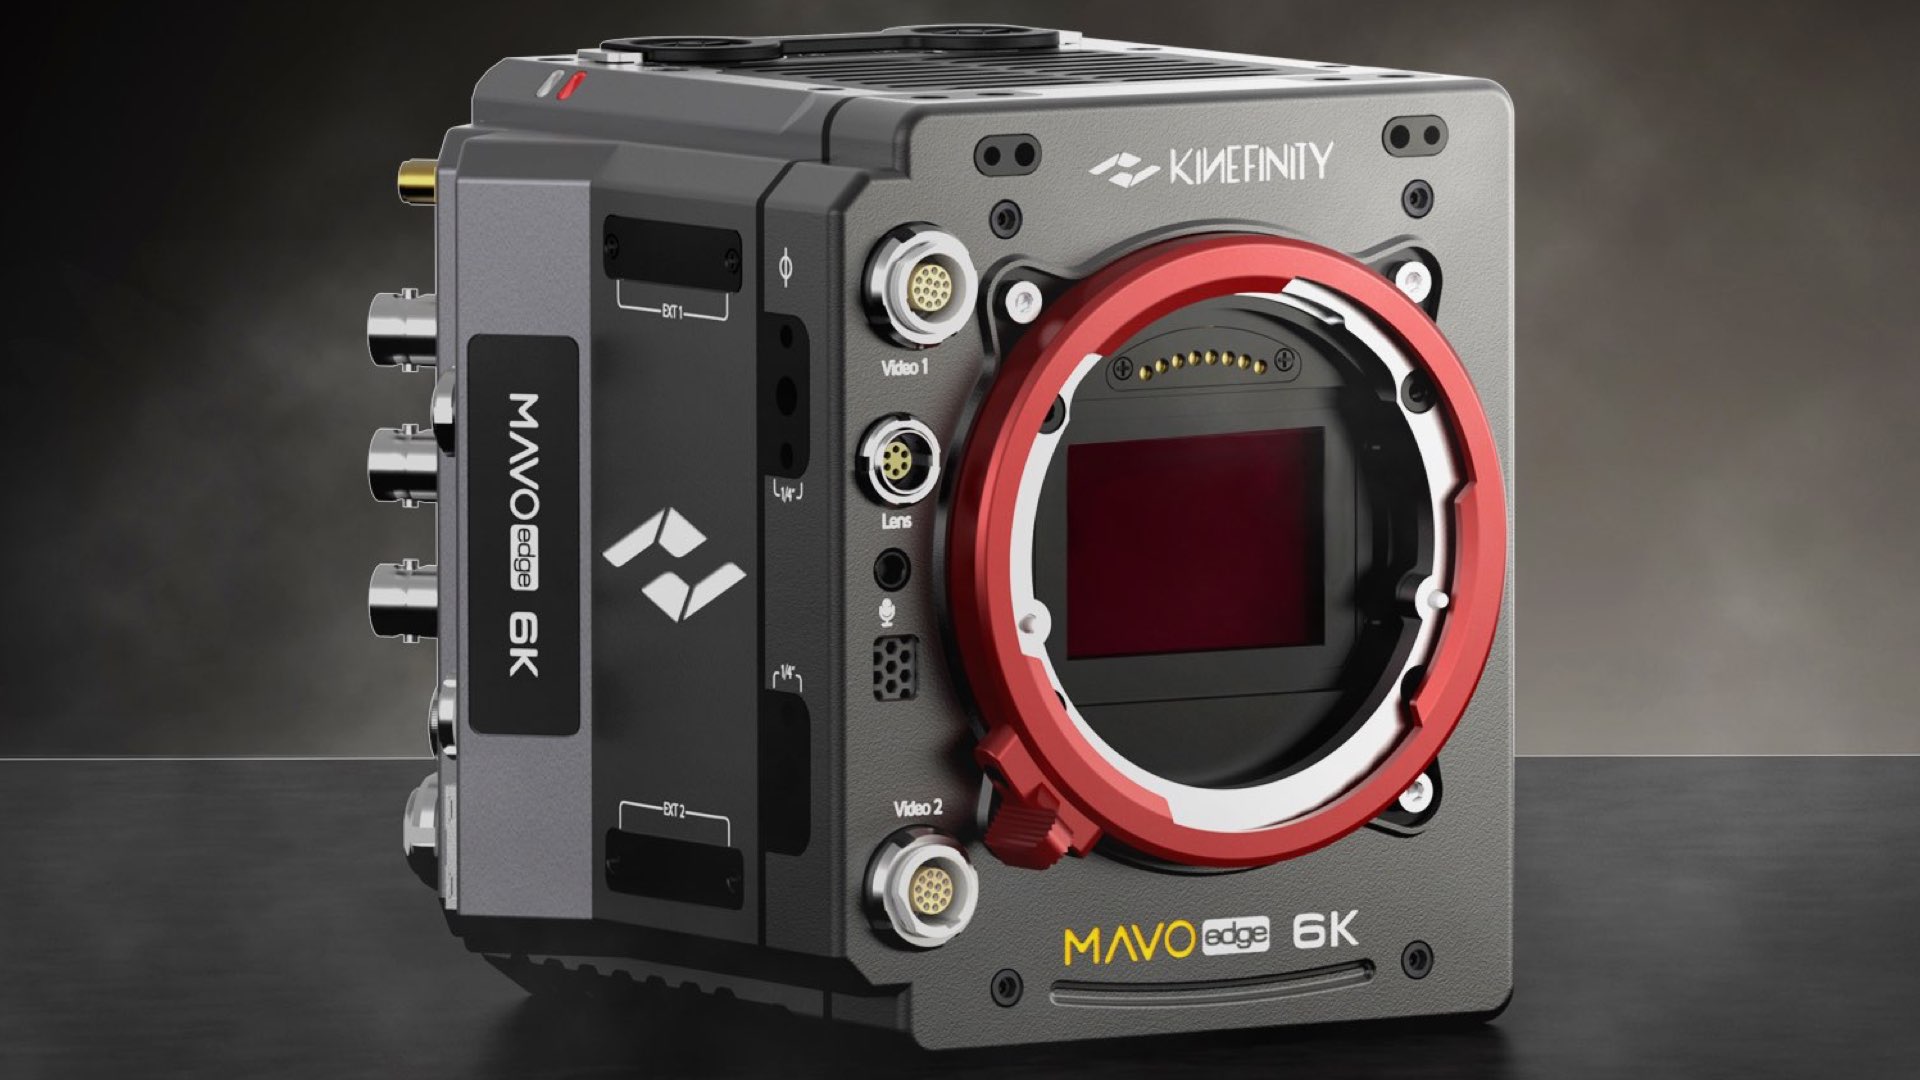 Kinefinity Continues to Rock With its new MAVO Edge 6K Cinema Camera